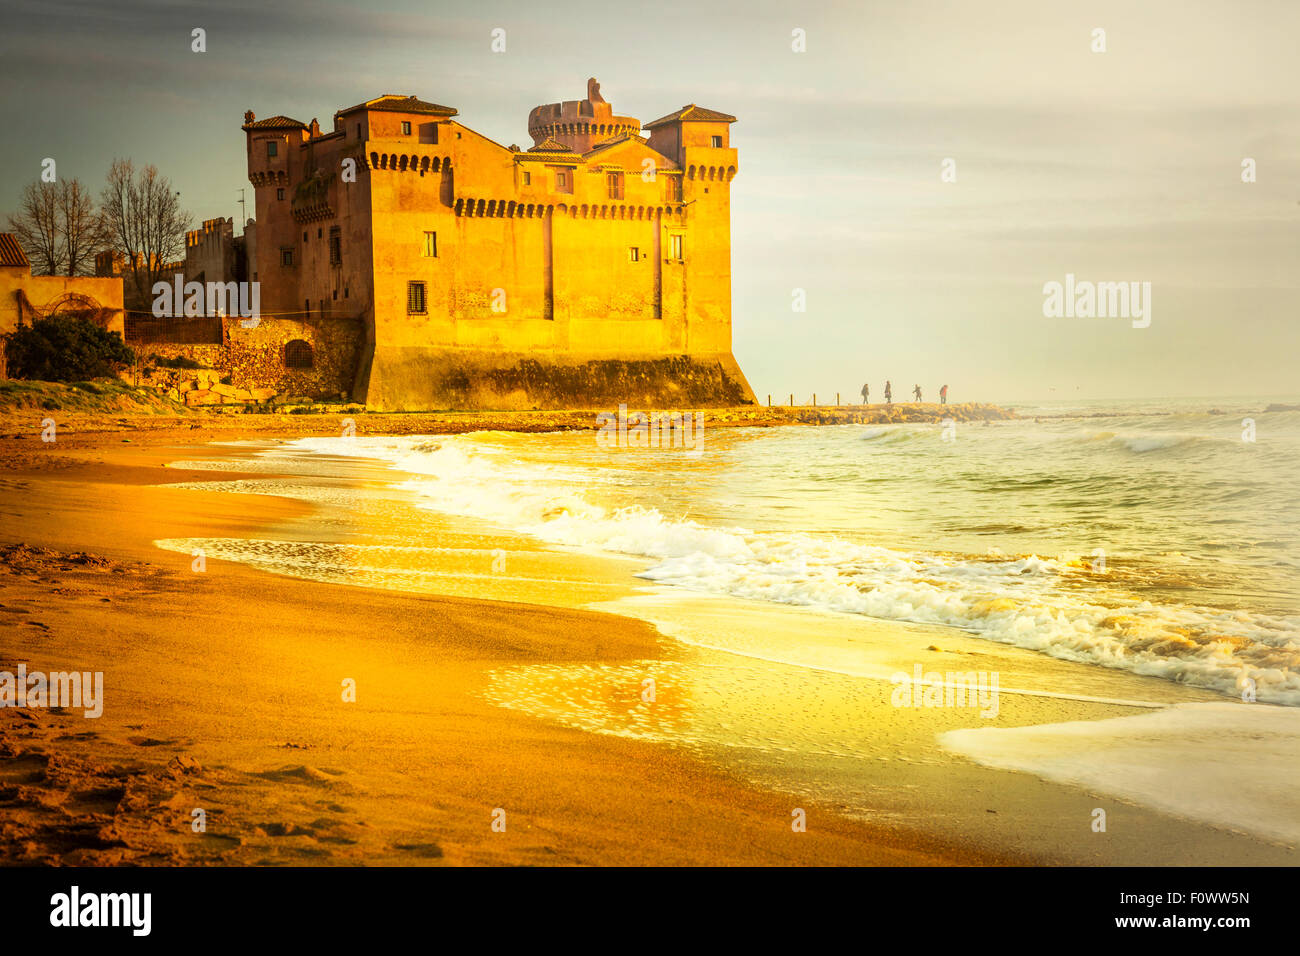 Golden sunset and medeival castle in Santa Severa, Italy Stock Photo